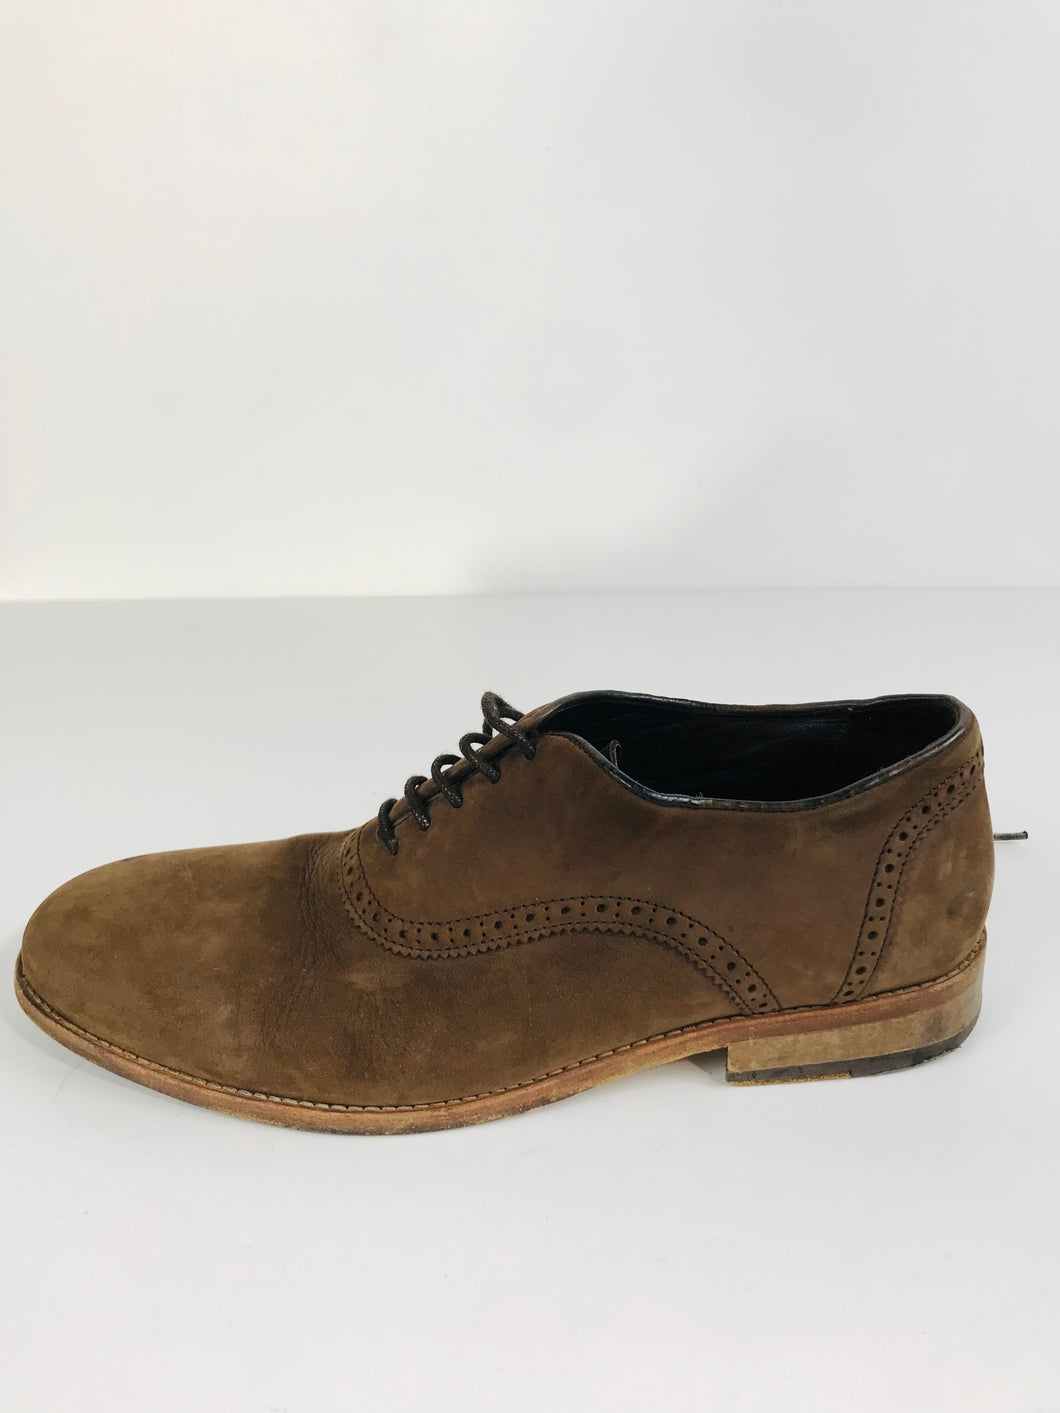 Cos Men's Leather Brogue Flats Shoes | EU41 UK7 | Brown